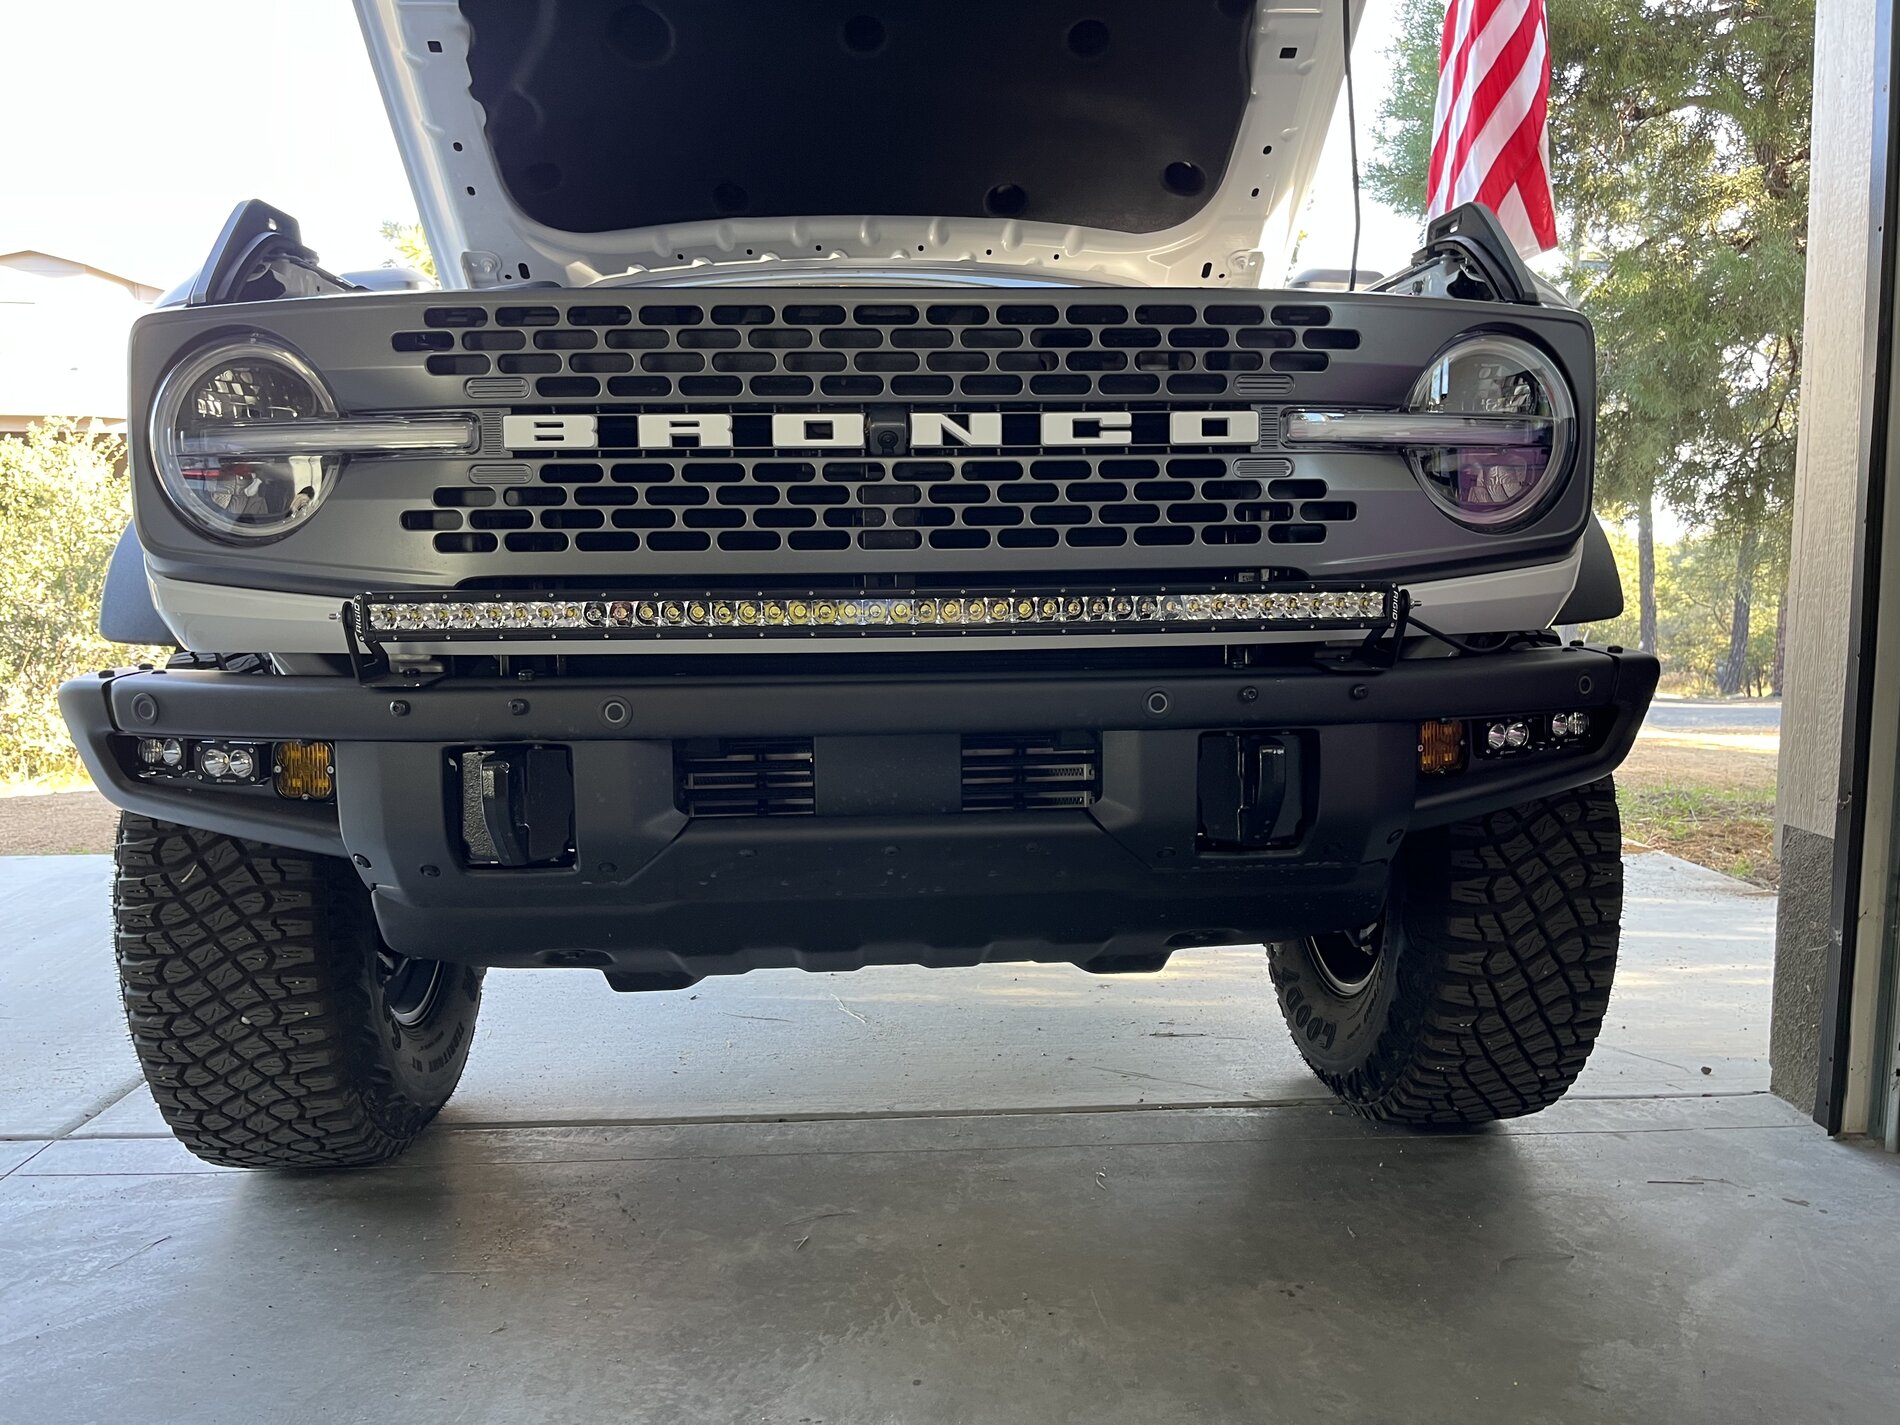 Ford Bronco Rigid light bar bumper install ED5BD136-2343-4120-981A-EADED15EDC6C